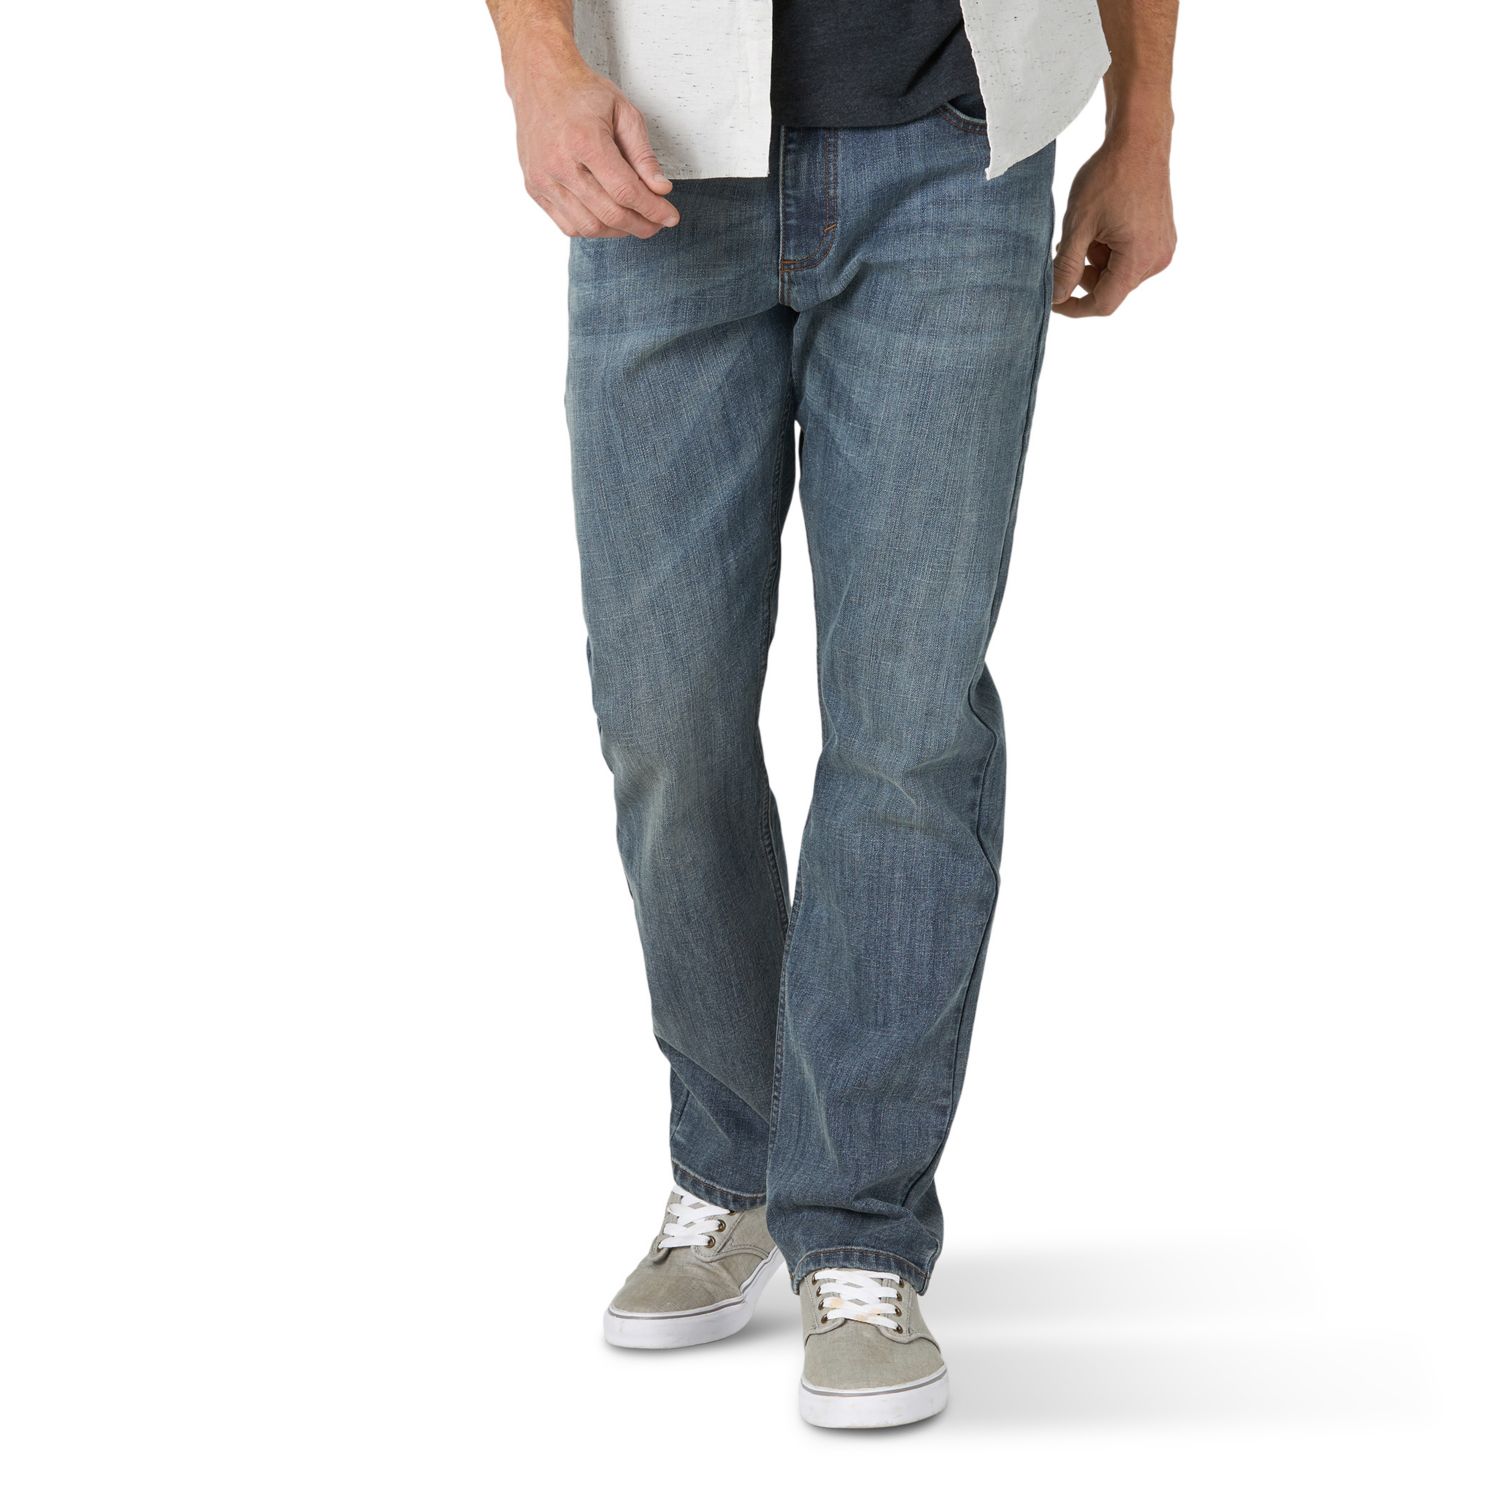 mens wrangler stretch jeans sale